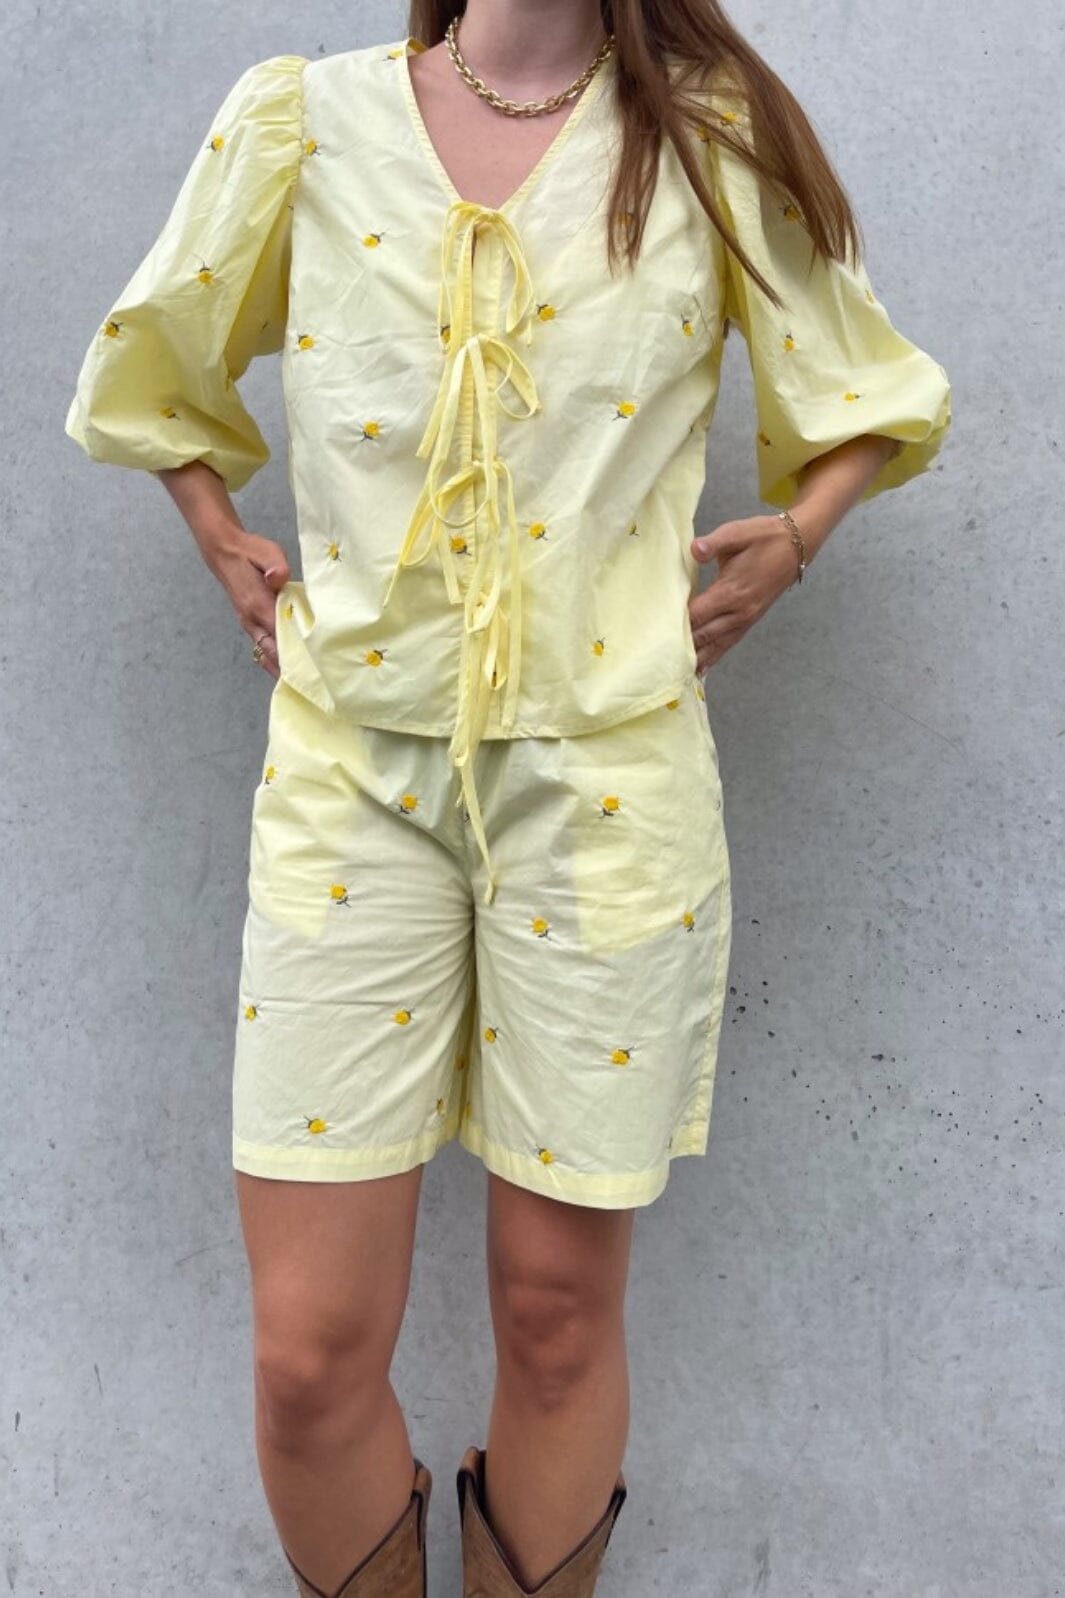 Noella - Asia Shorts - Pale Yellow W/ Flower Shorts 